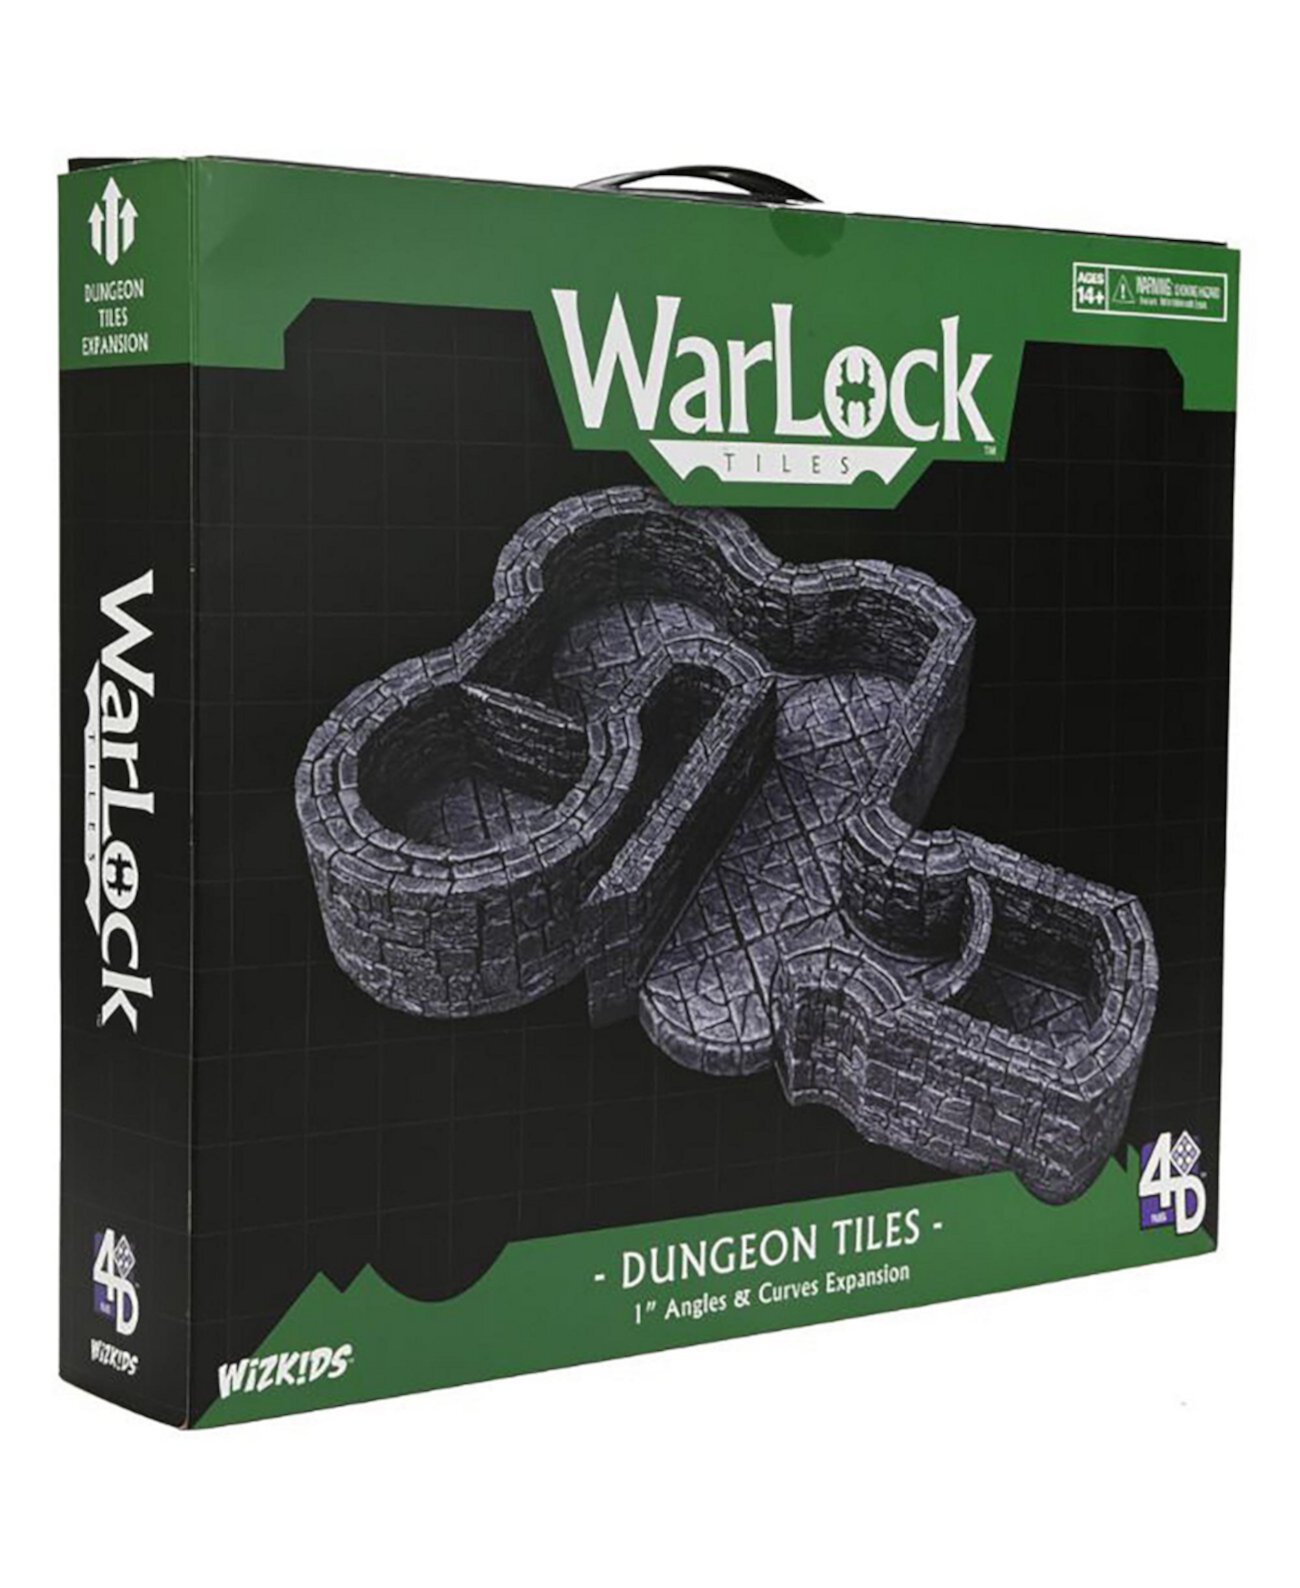 WarLock Tiles 1-дюймовый Dungeon Angles Curves Expansion Pack Настольный аксессуар для ролевой игры WizKids Games